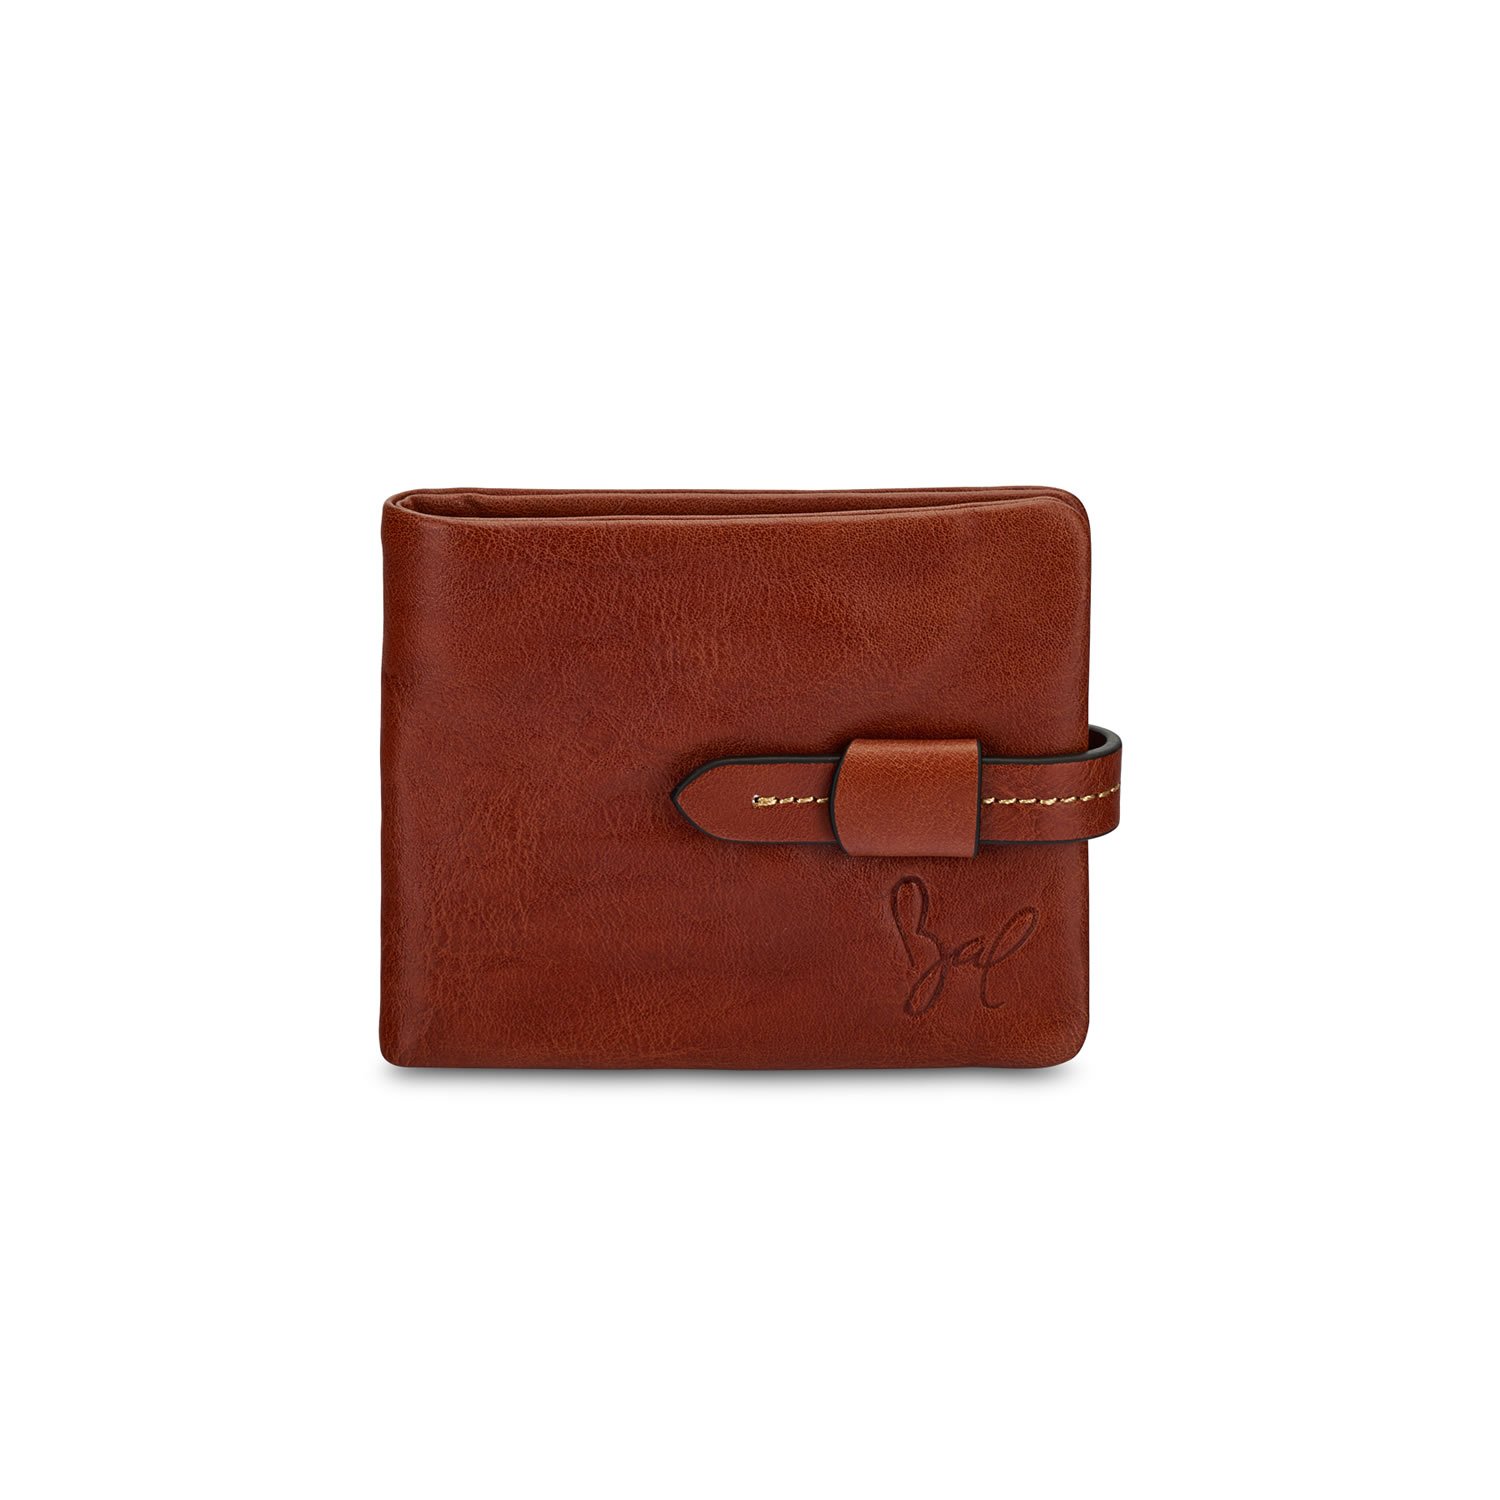 ROHIT BAL Tan Leather Men's Wallet (233BR) : Amazon.in: Fashion